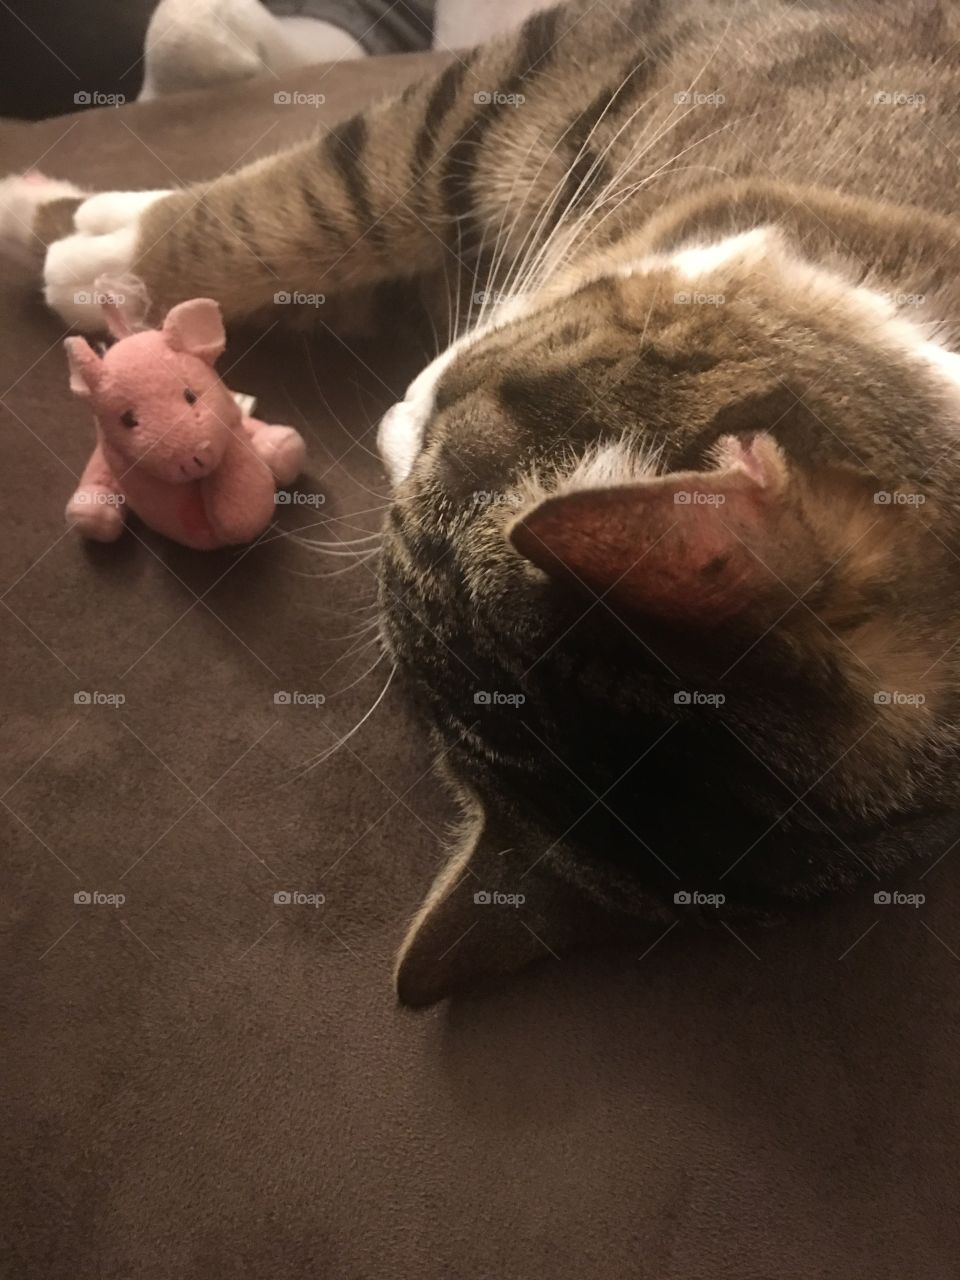 Kitty sleeps with pet piggy